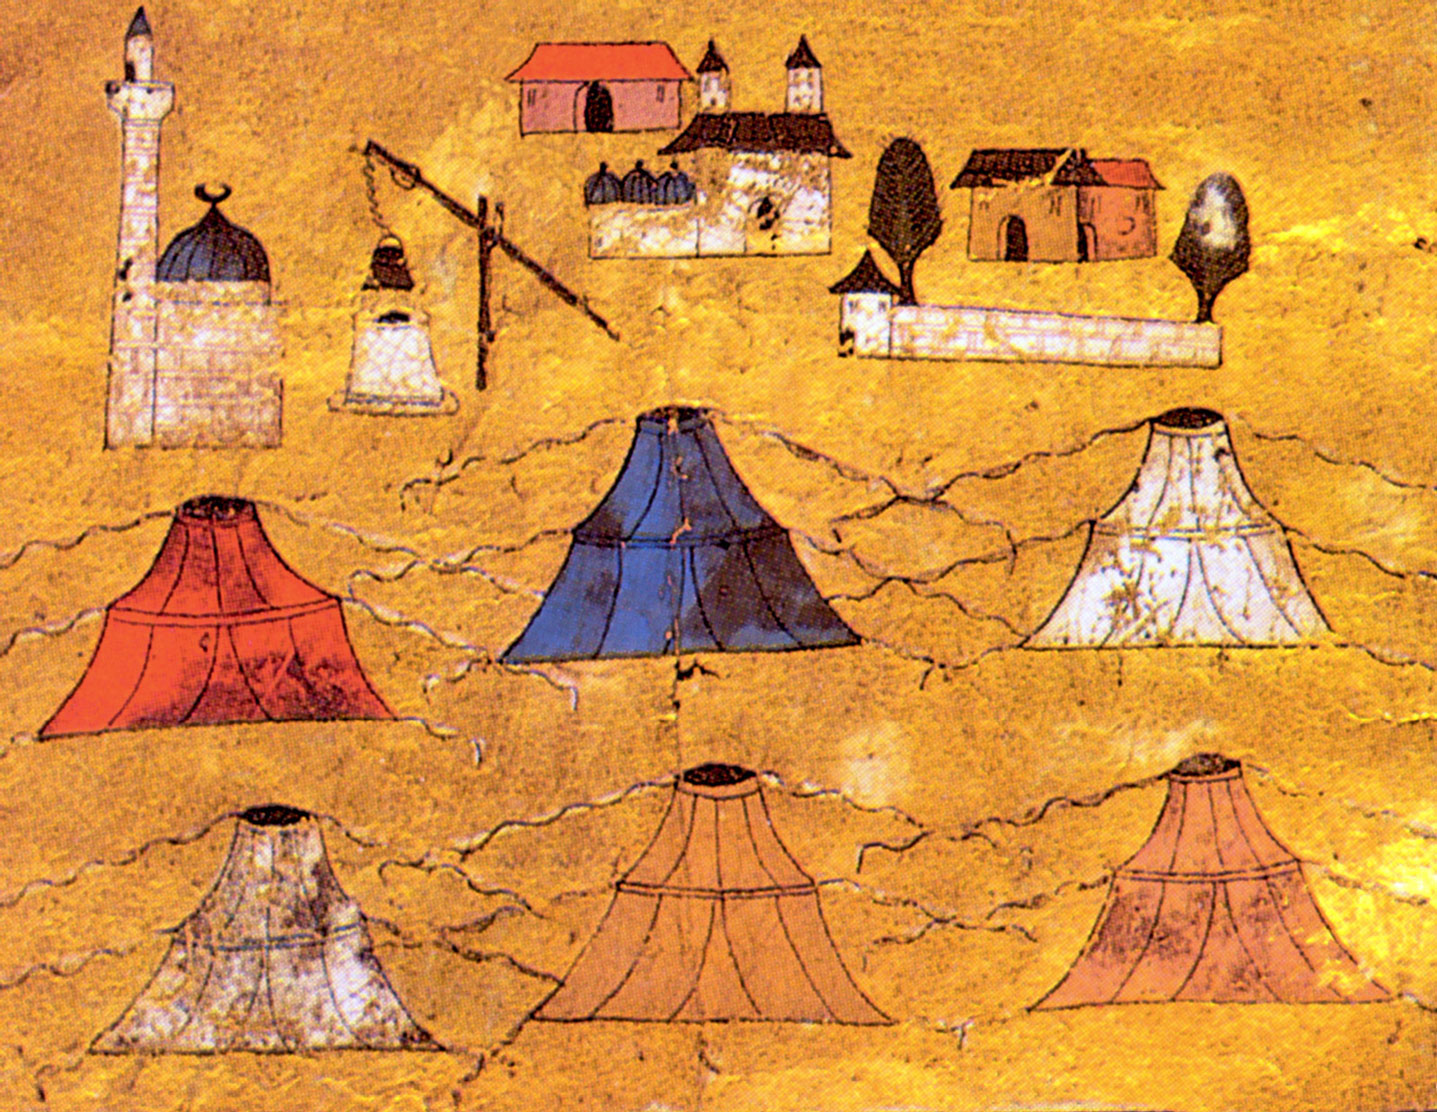 A mid-sixteenth century illustration of Ottoman military tents. 